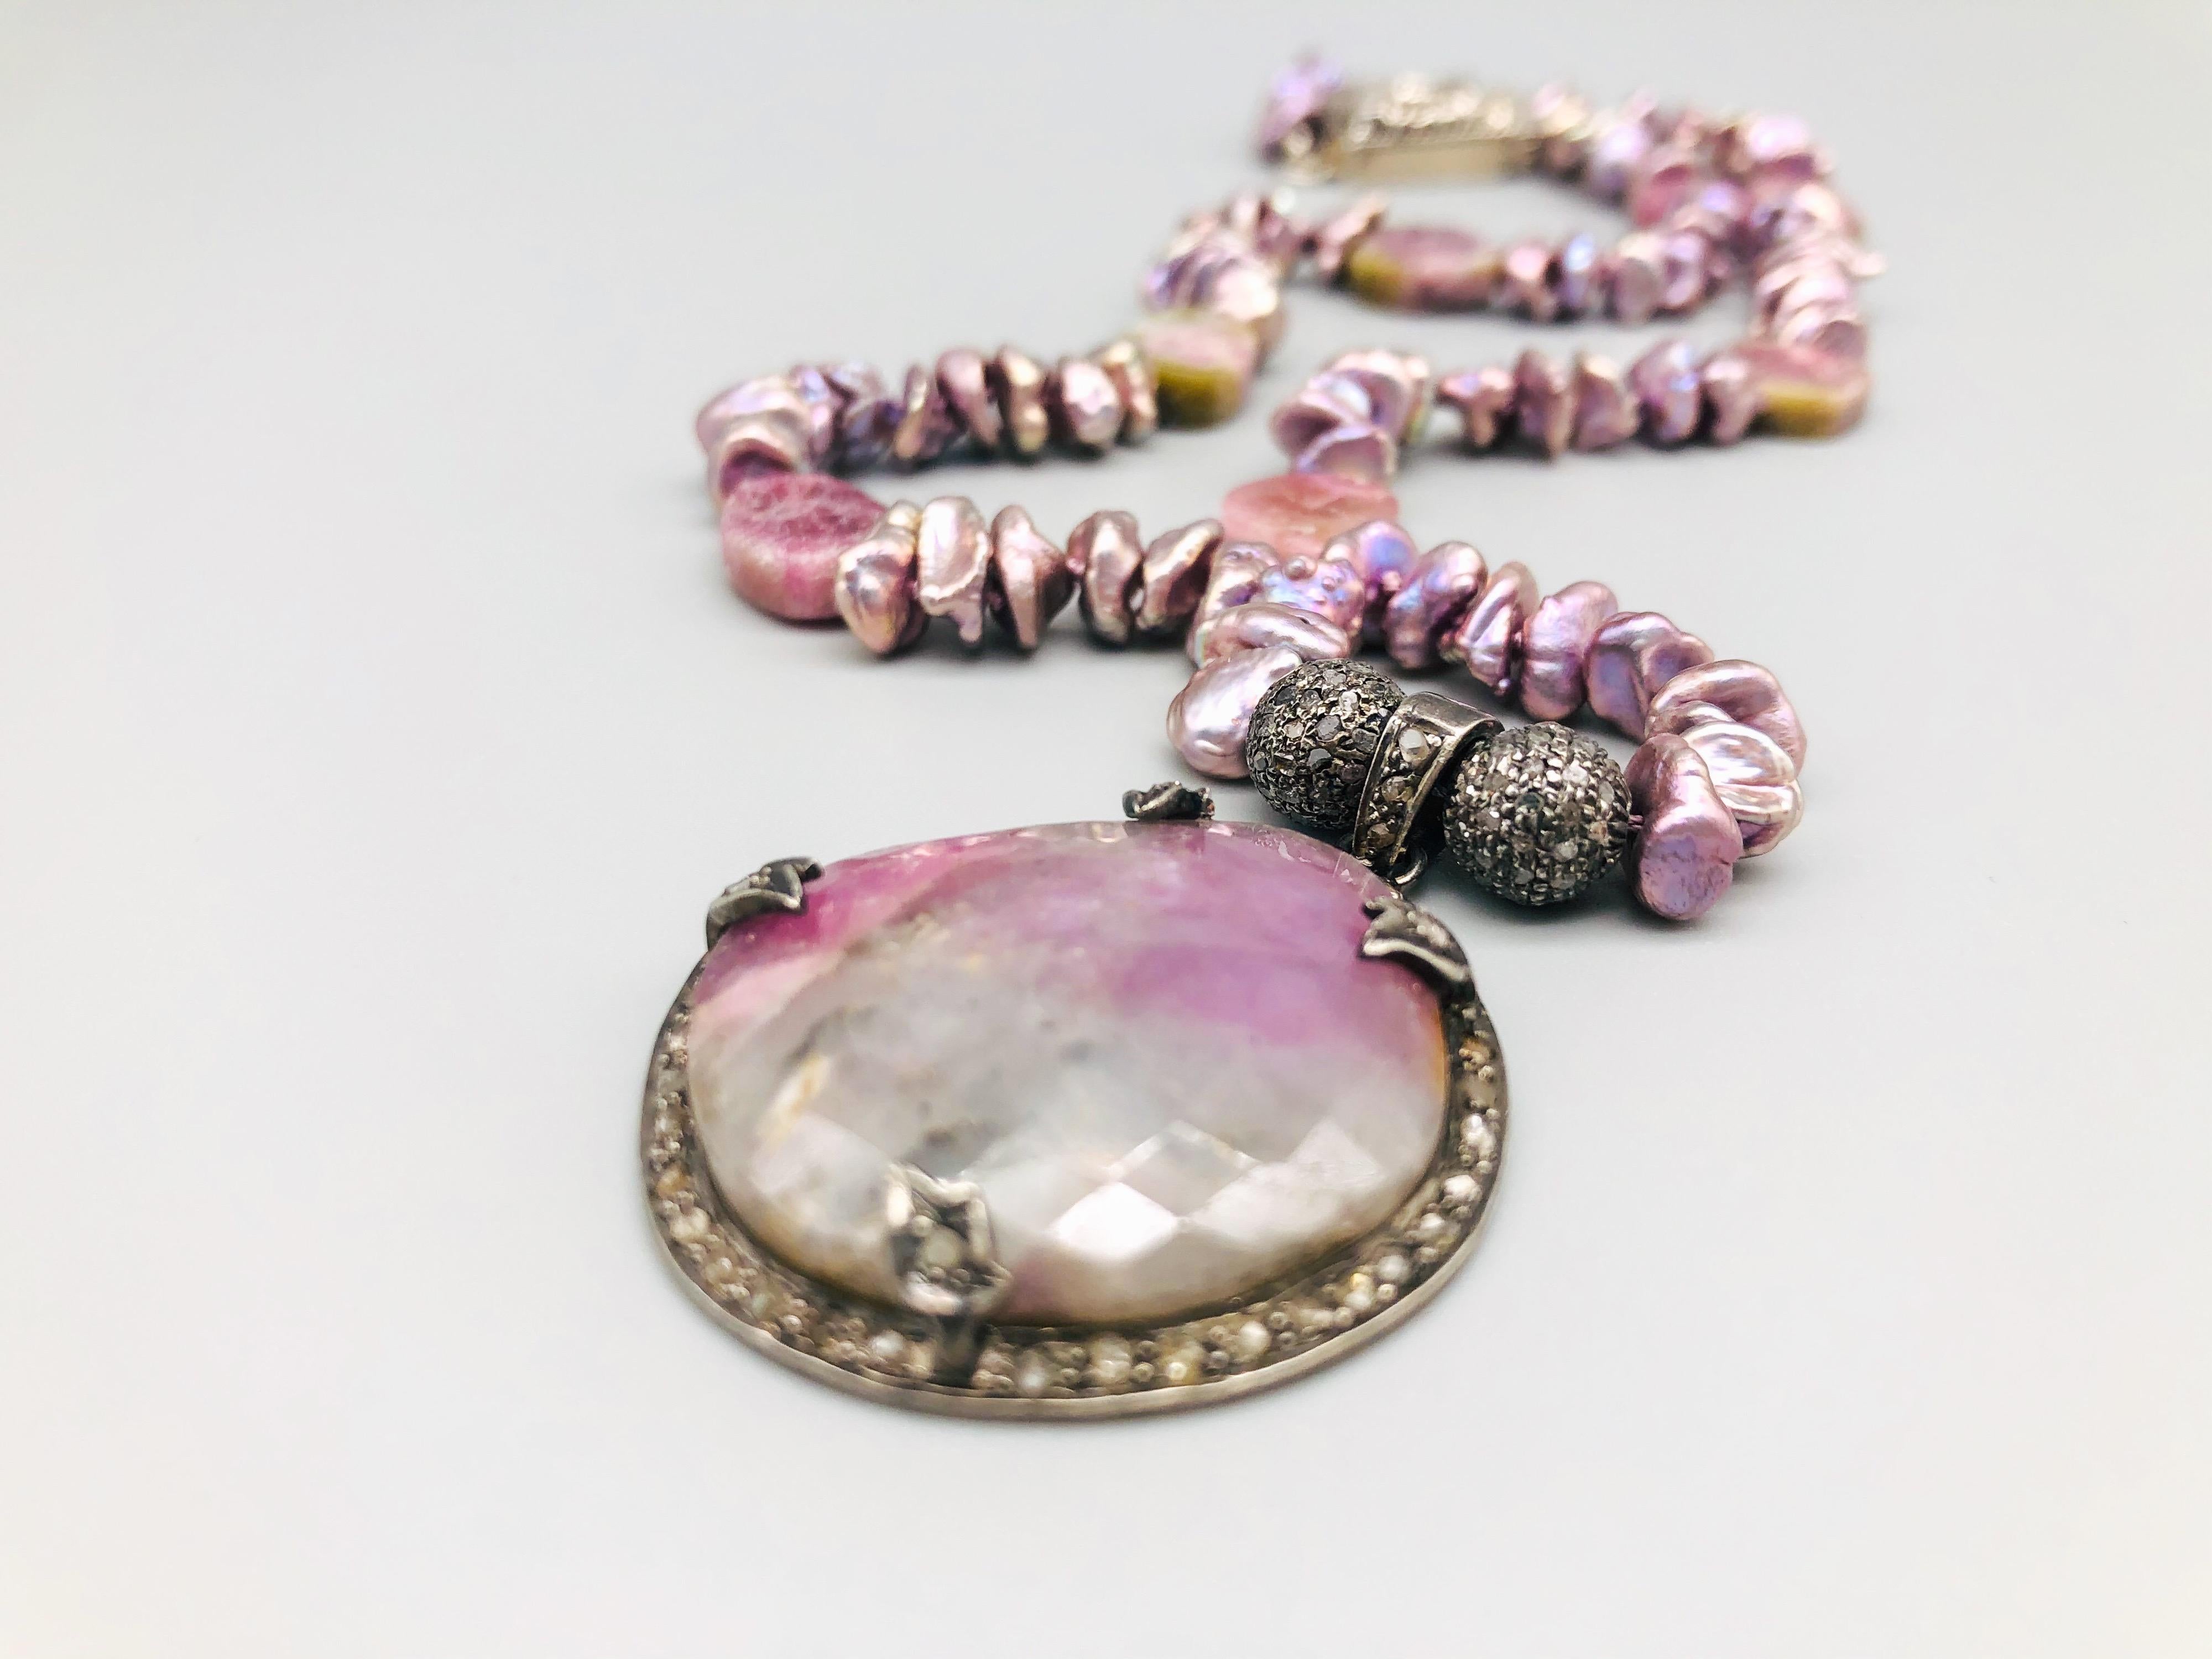 Mixed Cut A.Jeschel Romantic Pink Tourmaline and Diamond Pendant Necklace For Sale